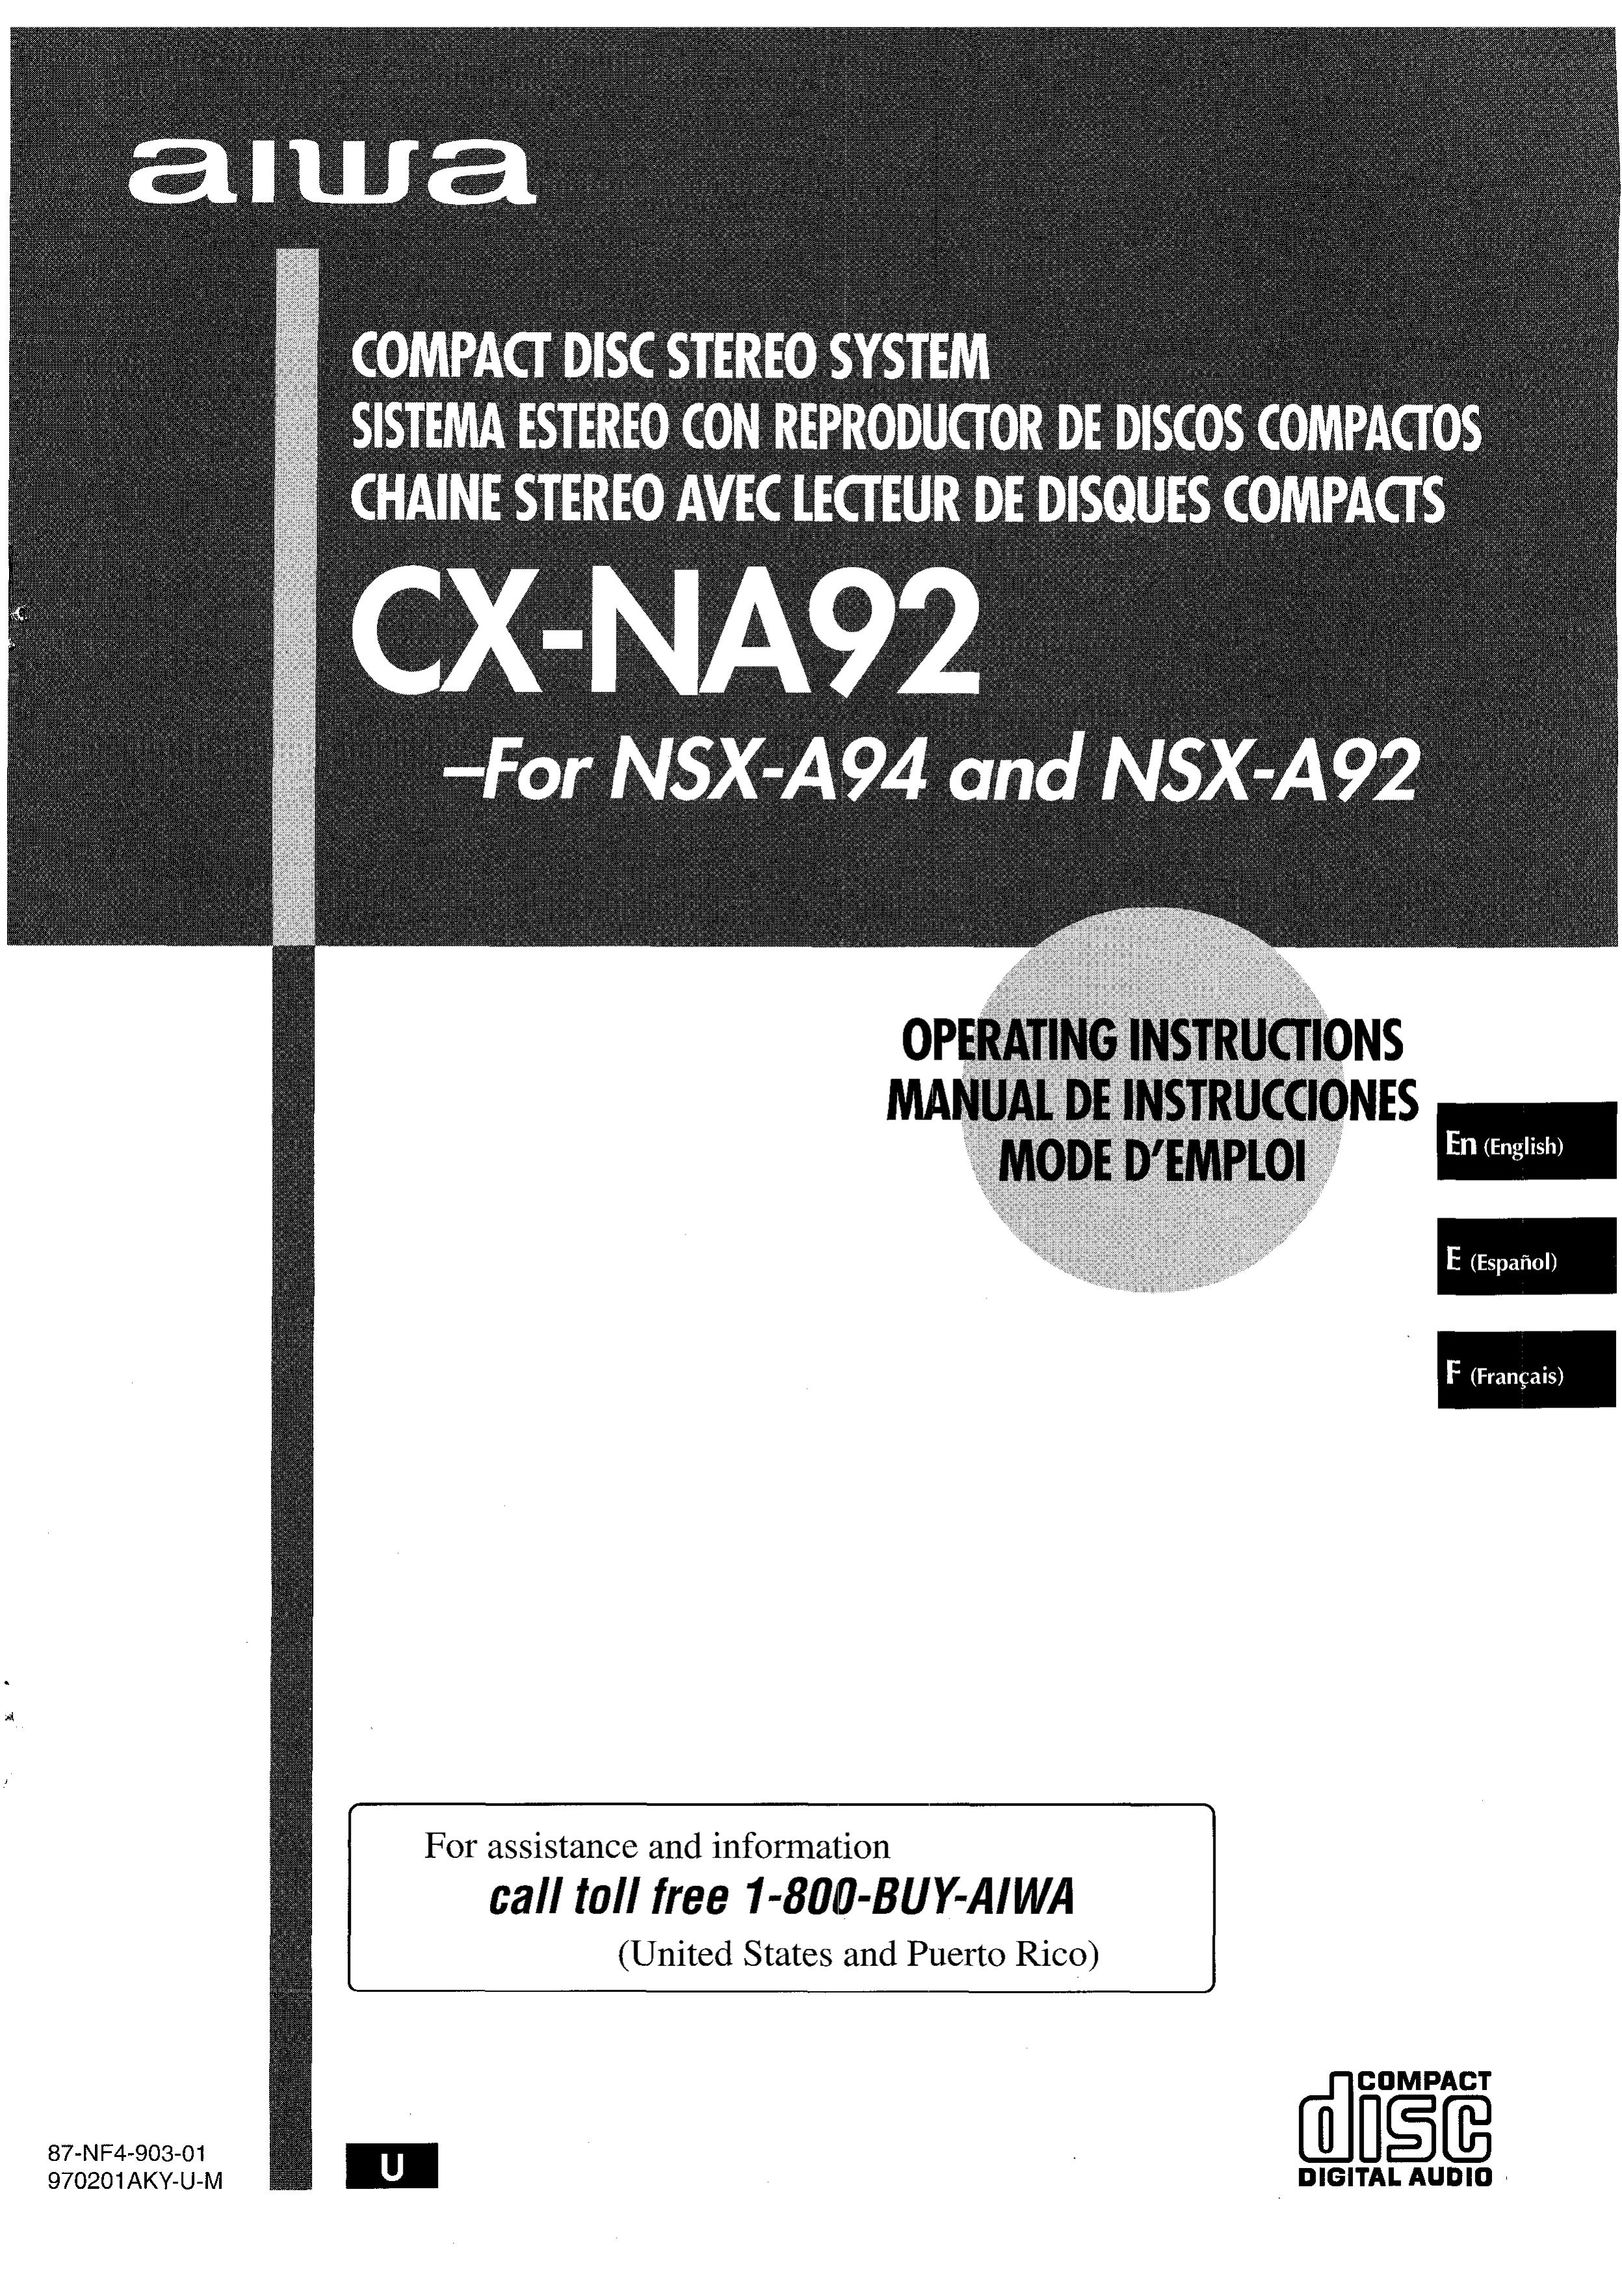 Aiwa CX-NA92 Stereo System User Manual